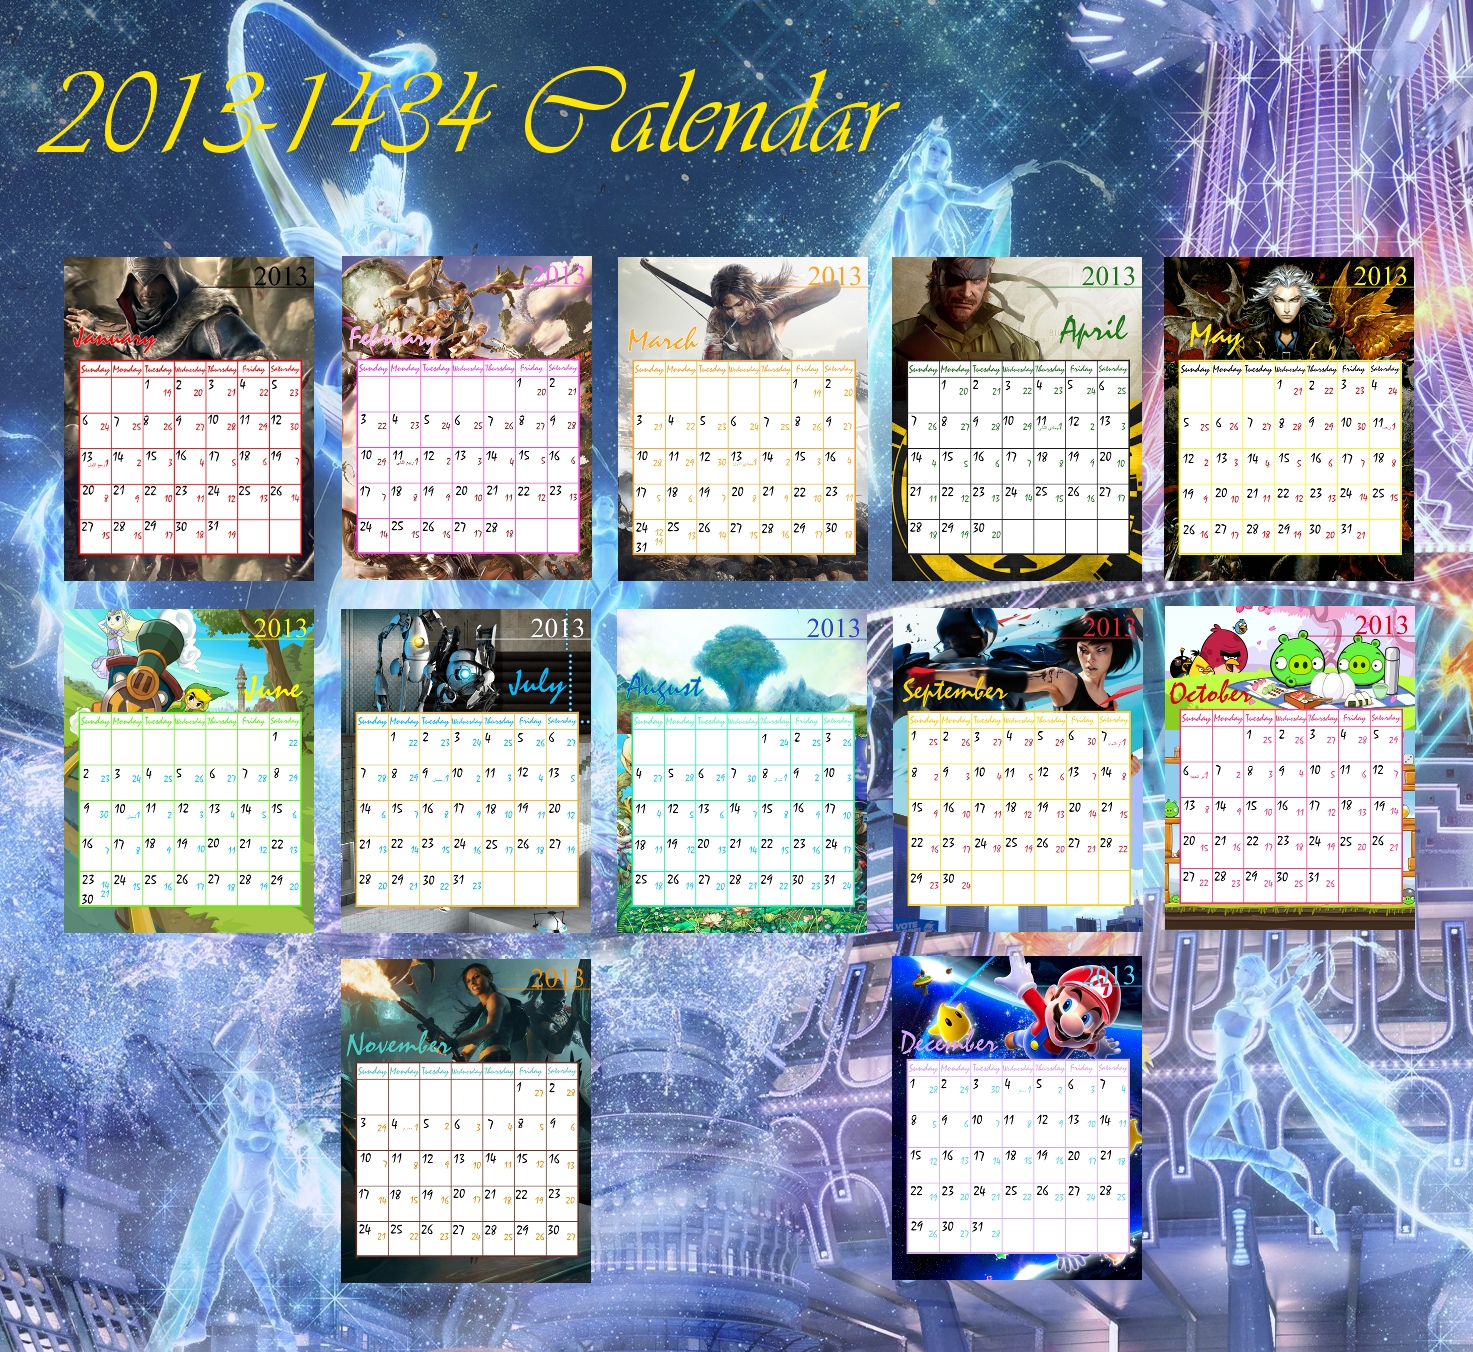 20131434Videogames_Calendar by KD1only on DeviantArt